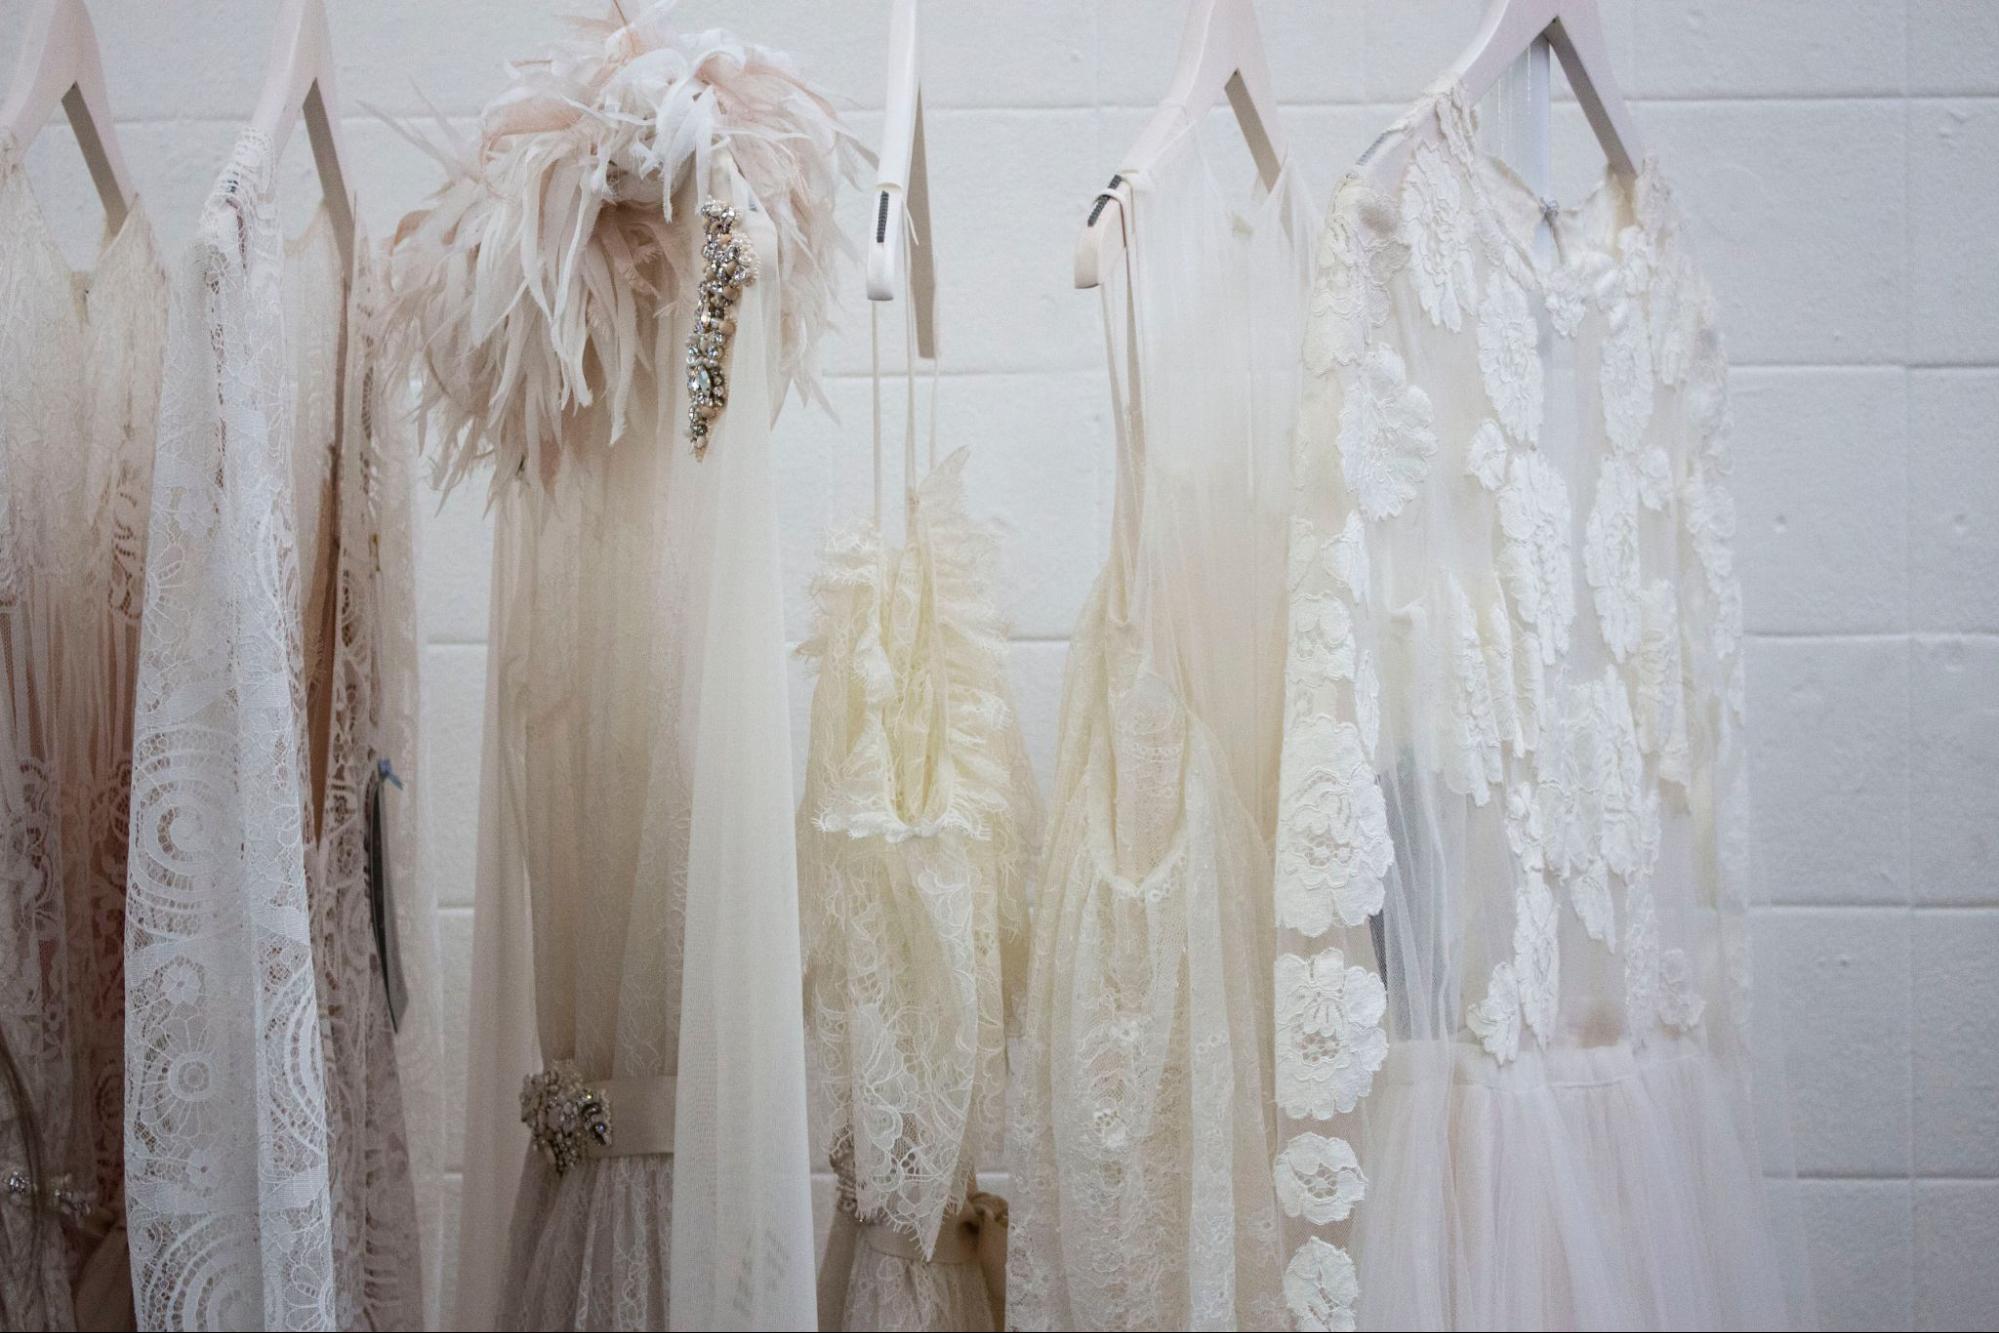 Undergarments 101: What to Wear Under a White Dress